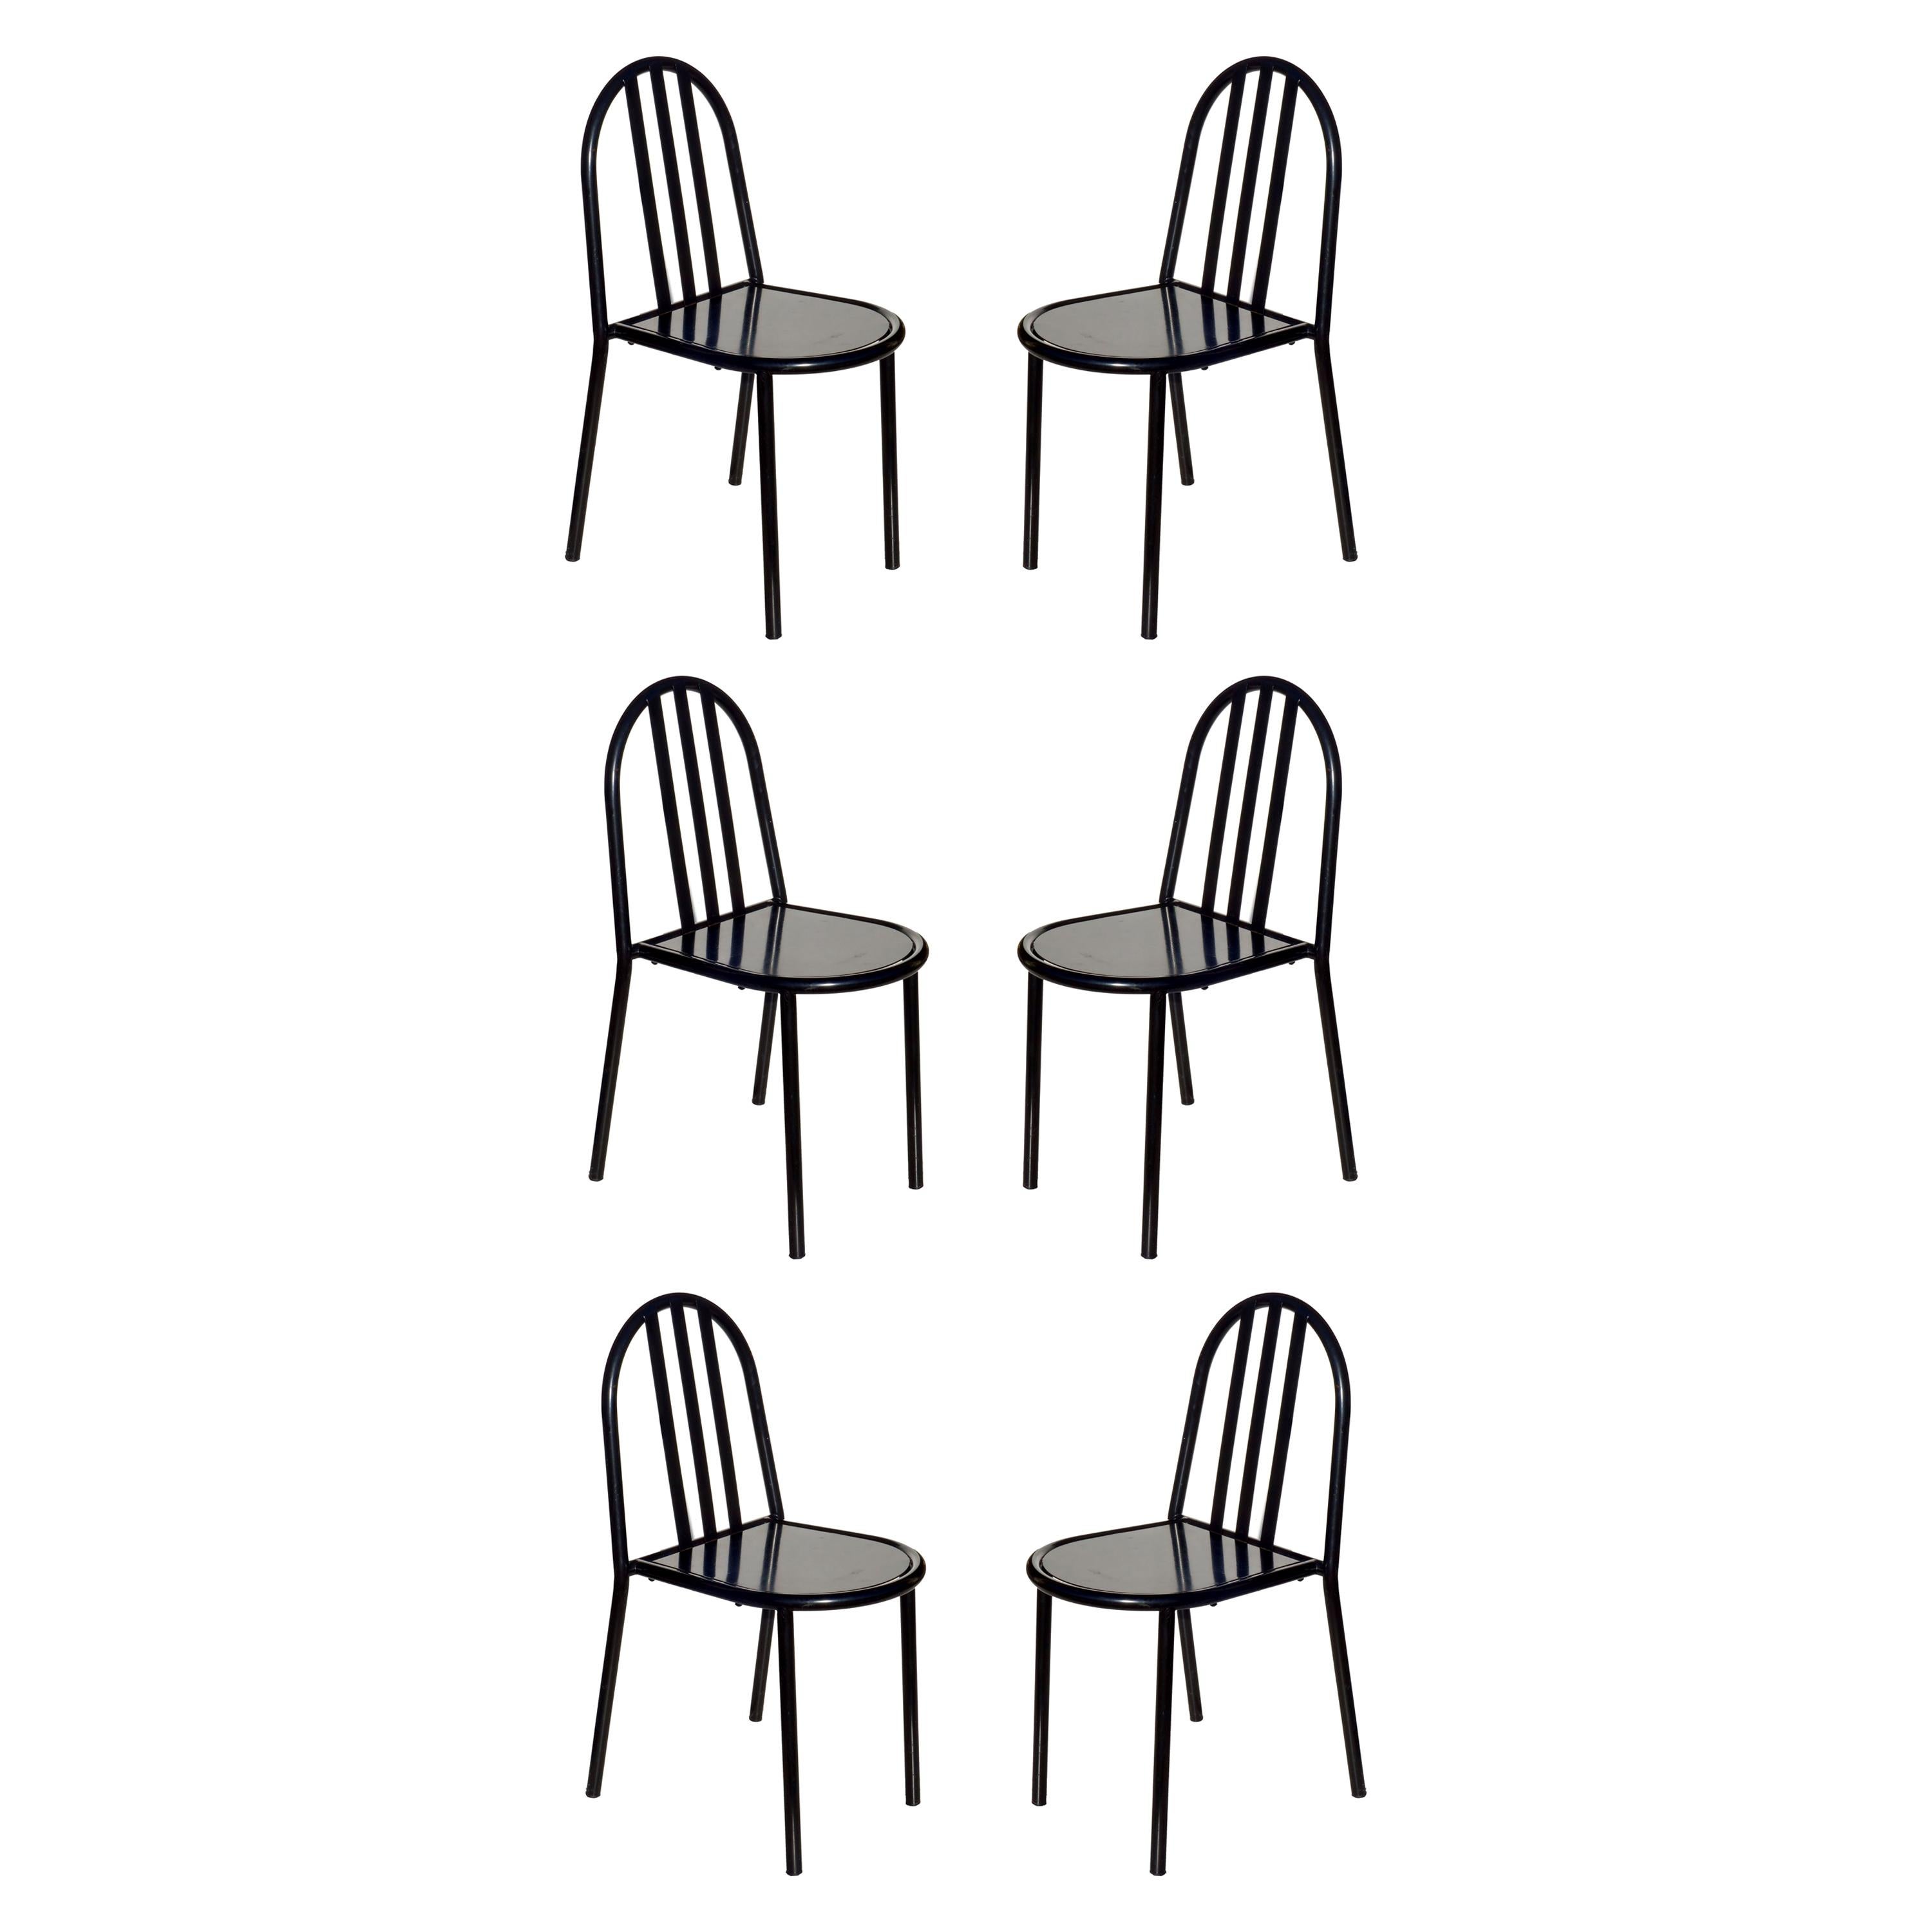 Robert Mallet Stevens No 222 Black Stackable Chair, Set of 6